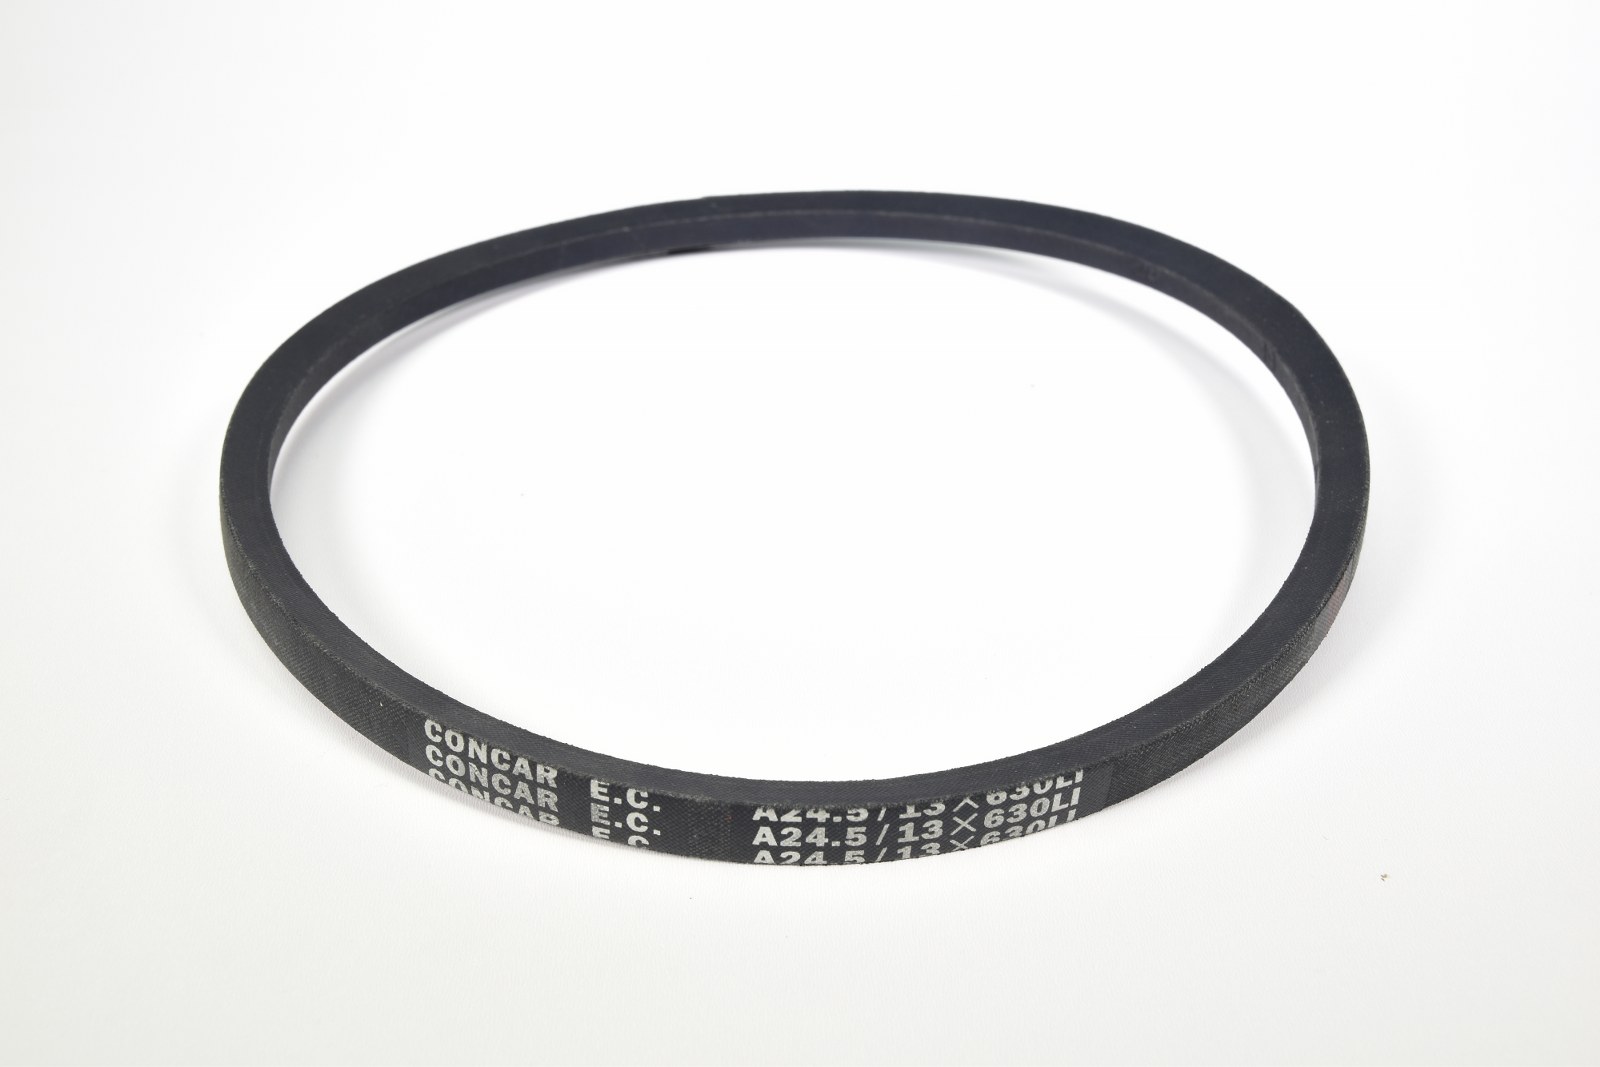 NEW A24.5 Details about   Concar V-belt-13 x 630 Li A24 1/2 